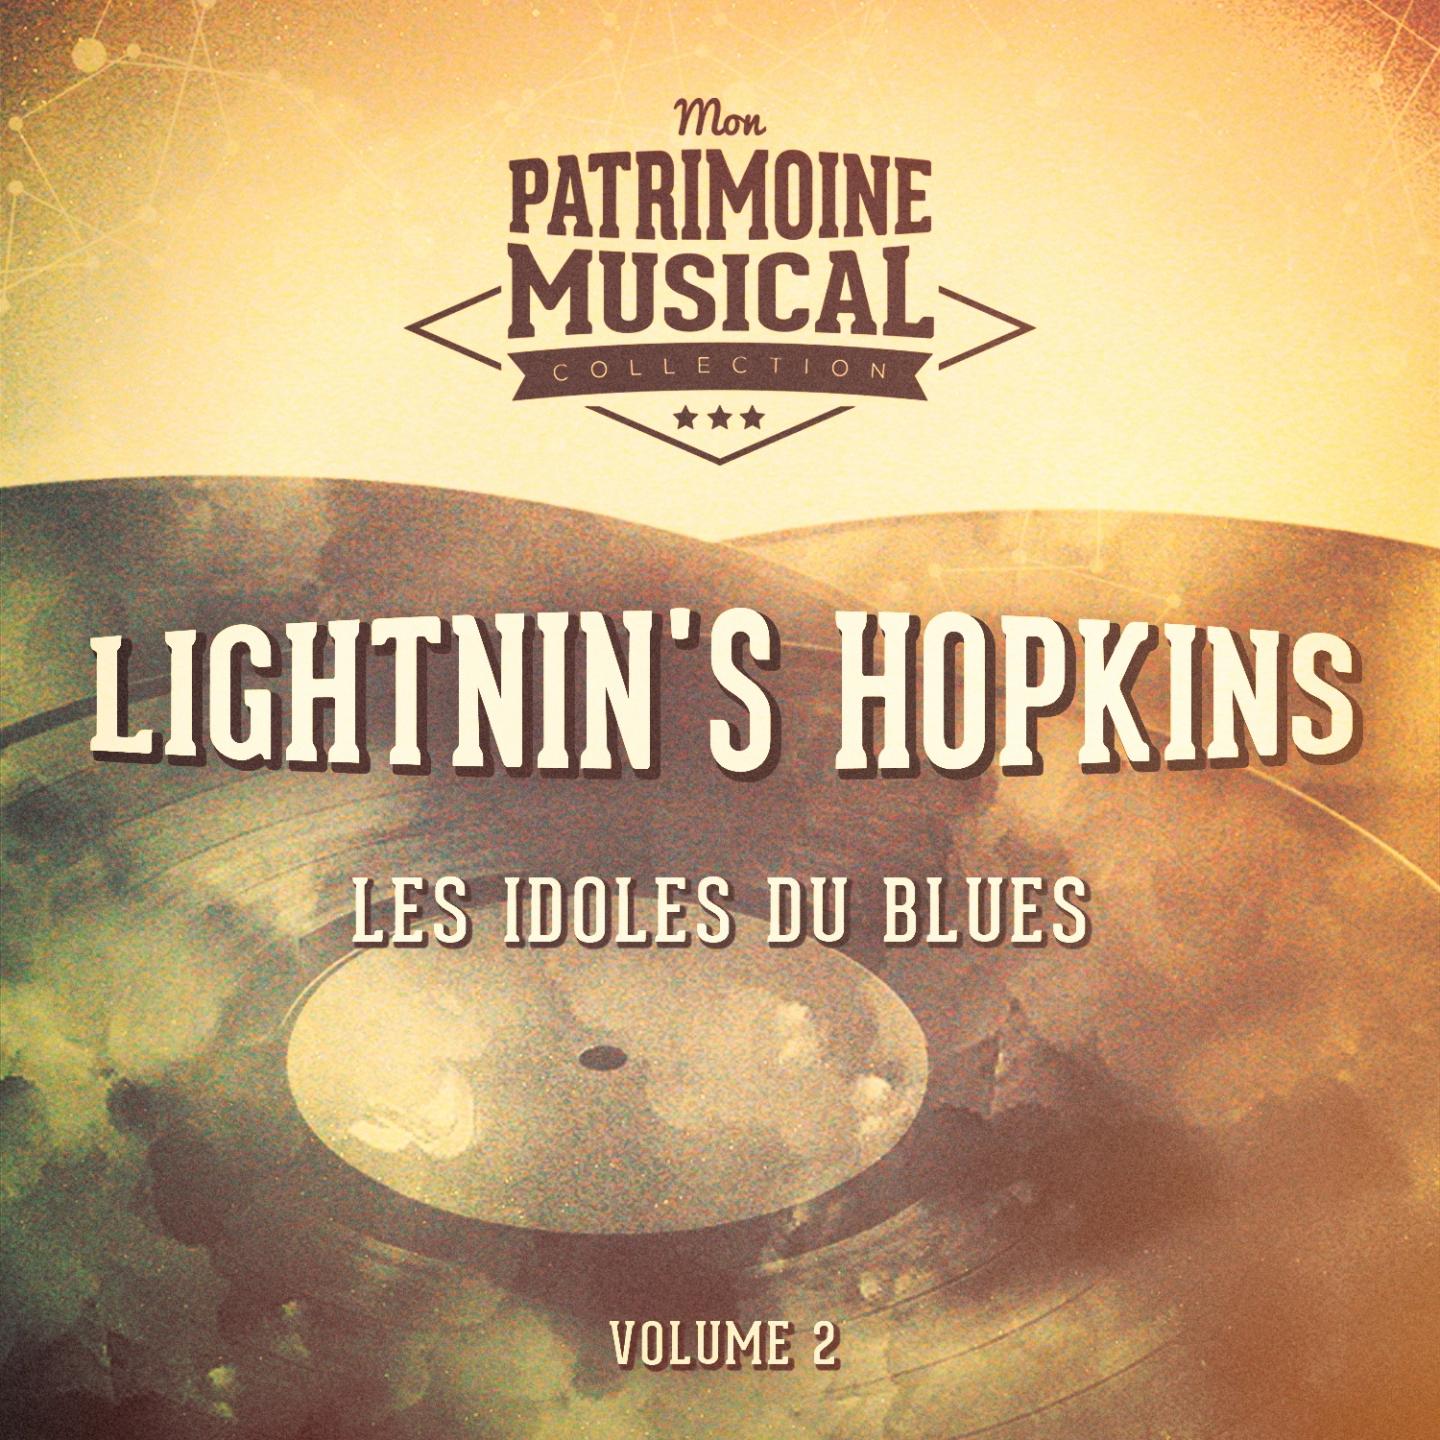 Les Idoles Du Blues: Lightnin' Hopkins, Vol. 2